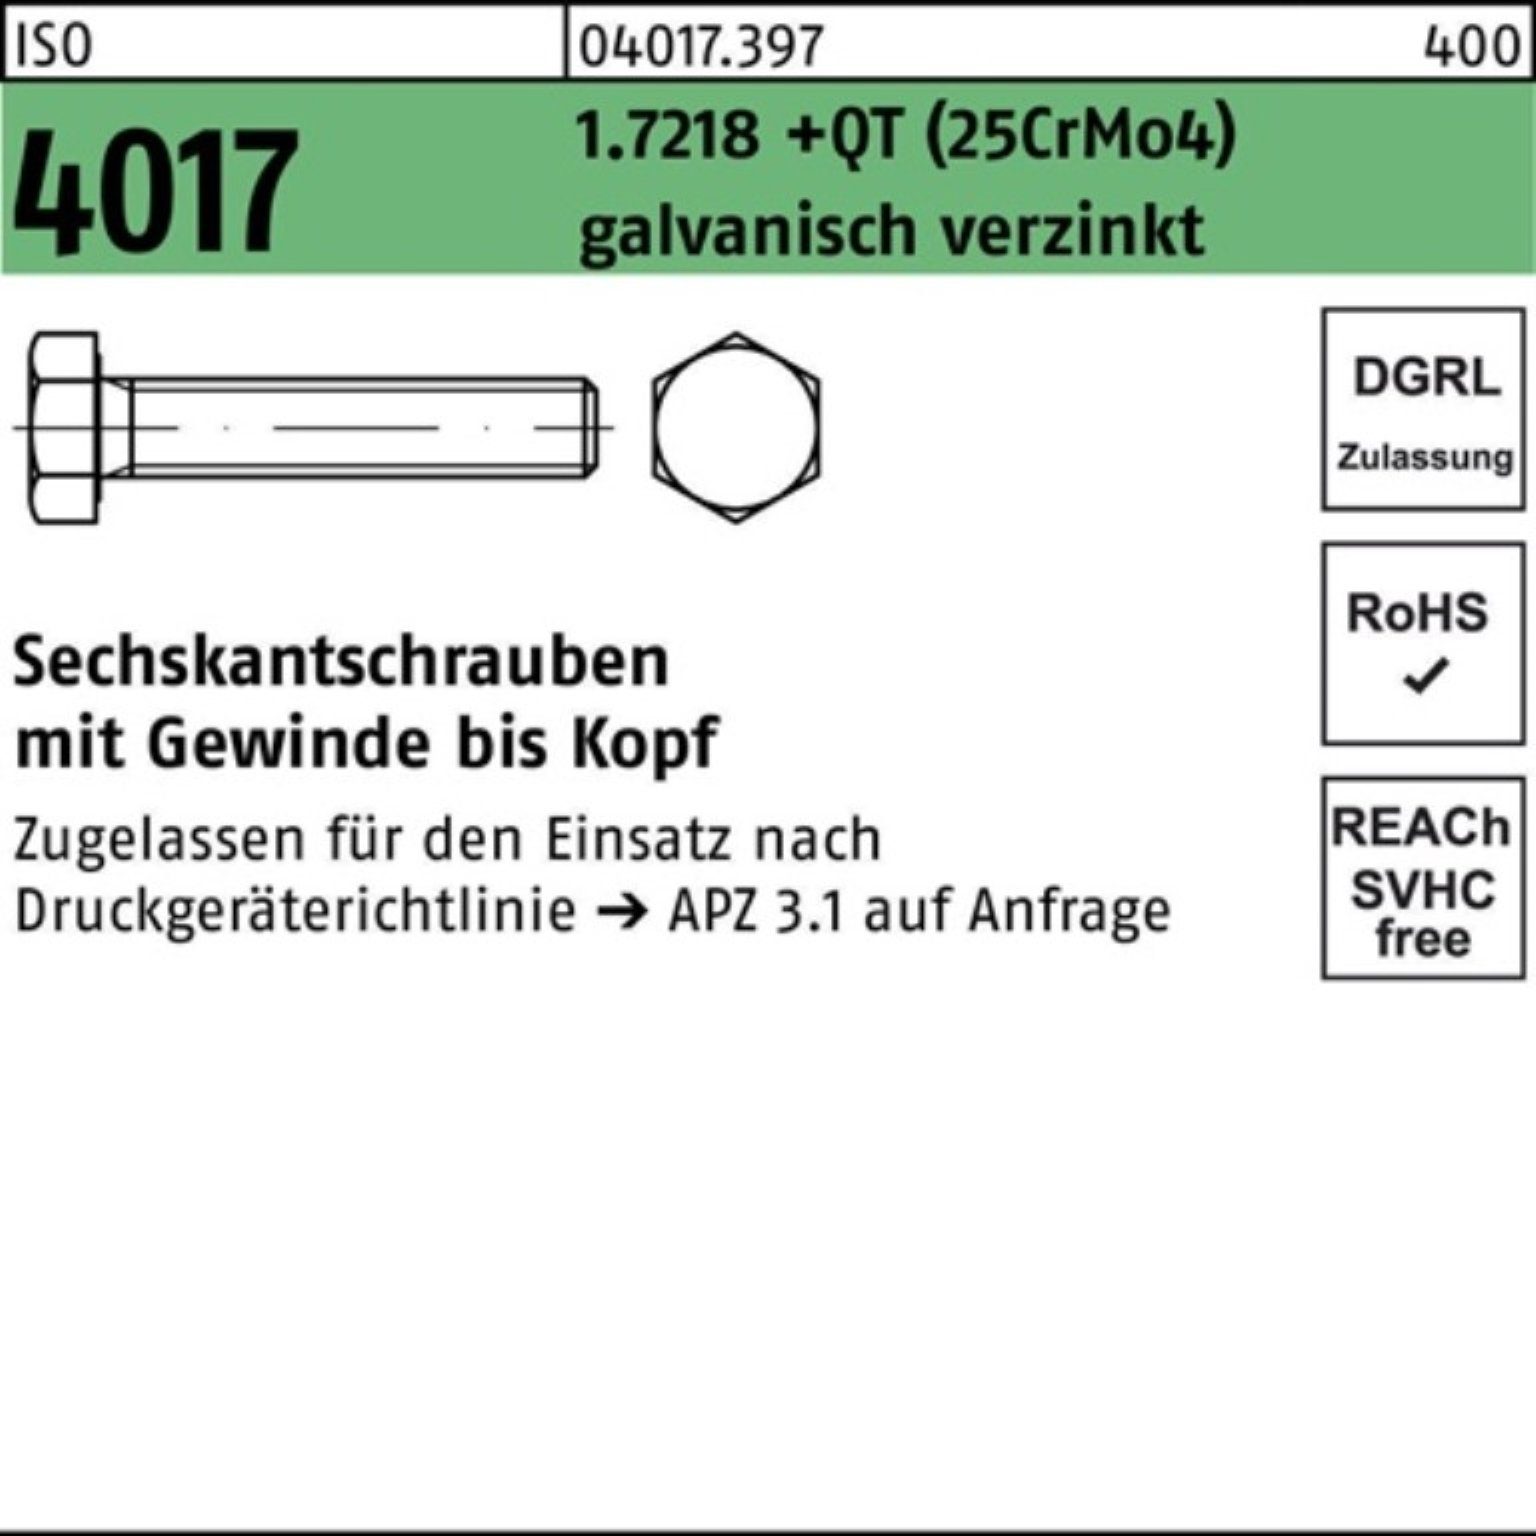 Pack Sechskantschraube +QT Sechskantschraube 4017 g Bufab 1.7218 VG 100er (25CrMo4) M20x40 ISO